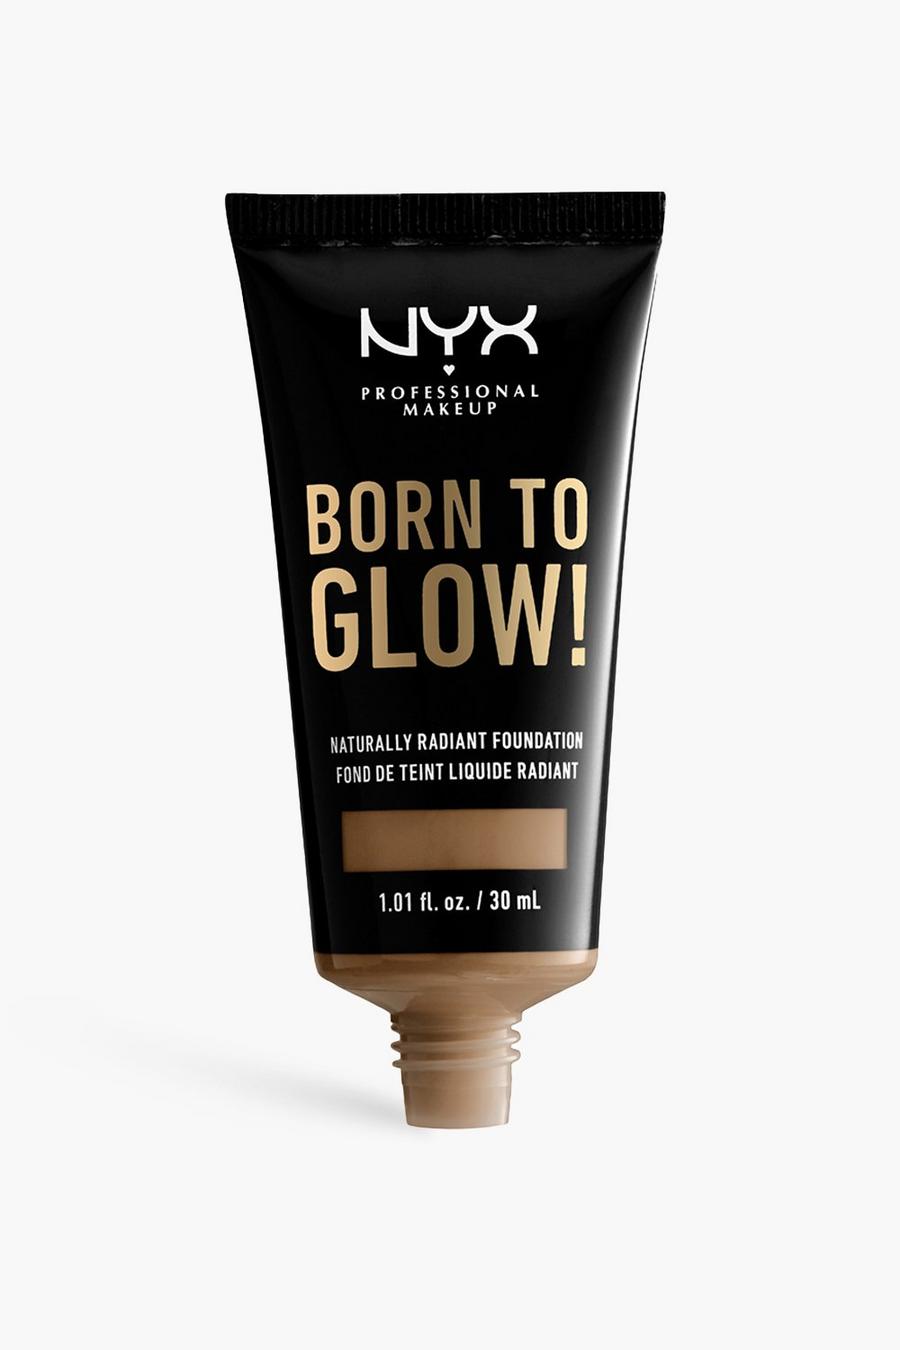 NYX Professional Makeup - Fond de teint radiance naturelle - Born To Glow!, 16 mahogany